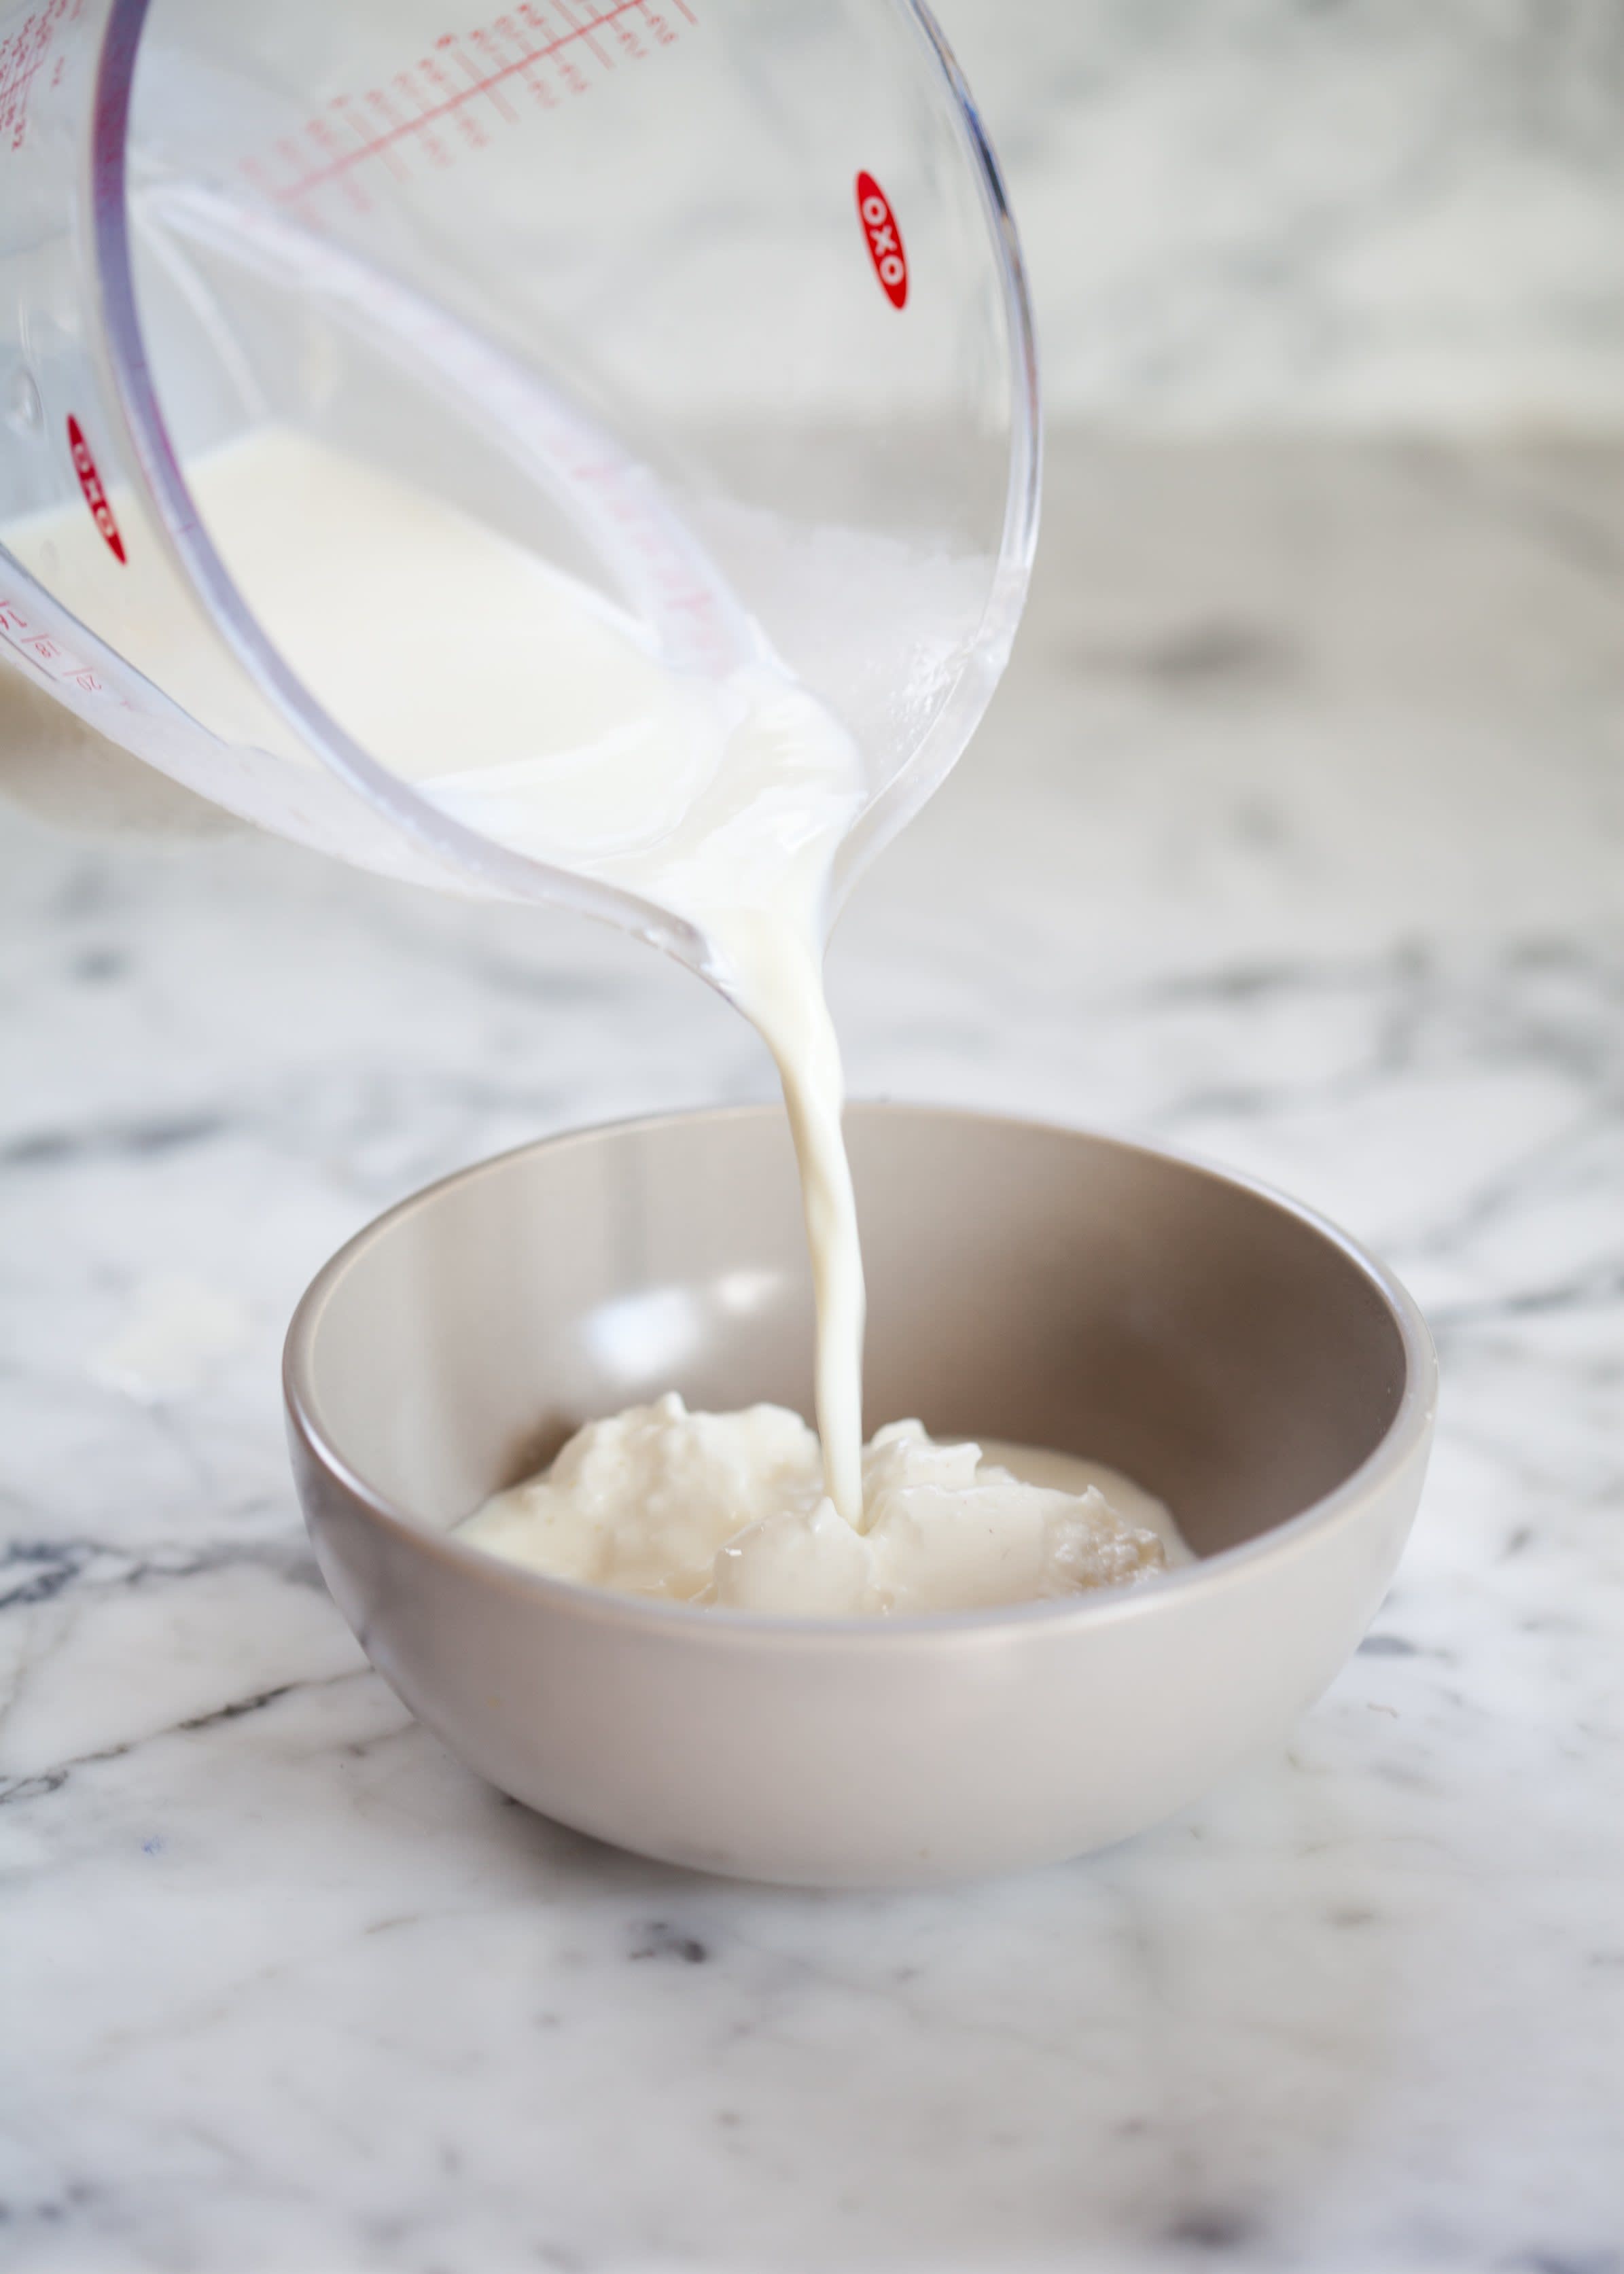 How To Make Yogurt at Home